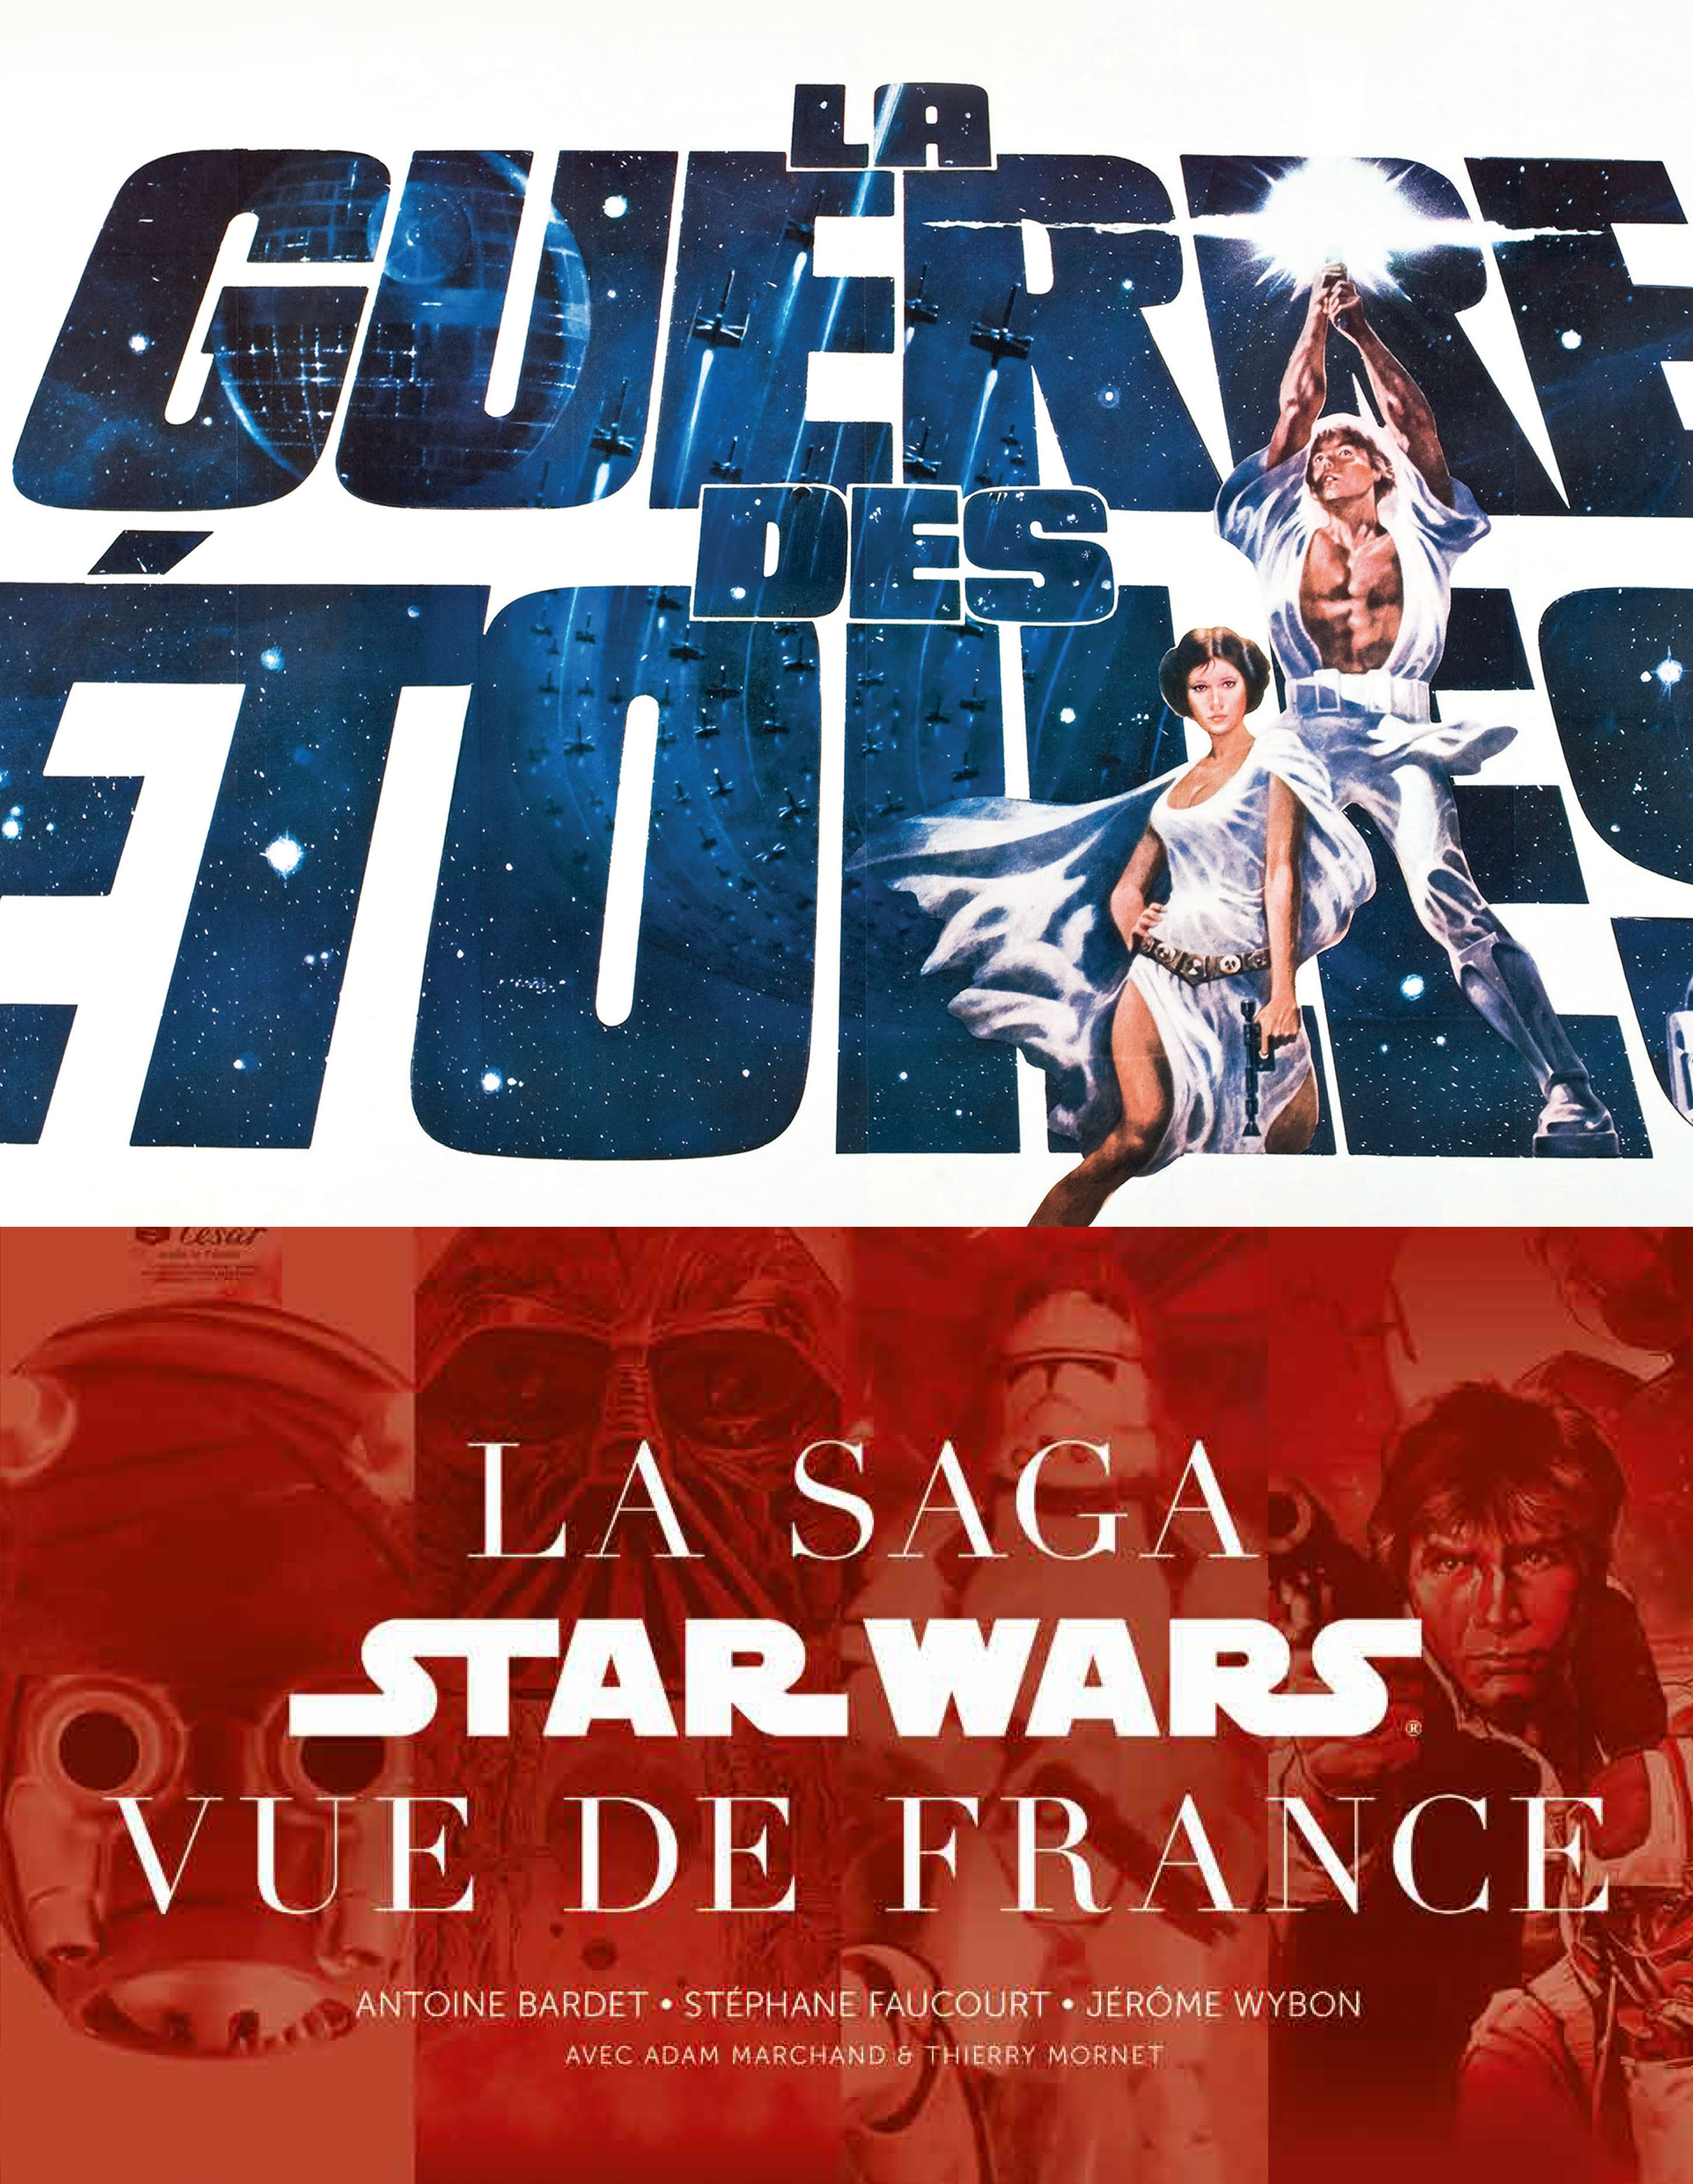 La Guerre des étoiles, la saga Star Wars vue de France - couv